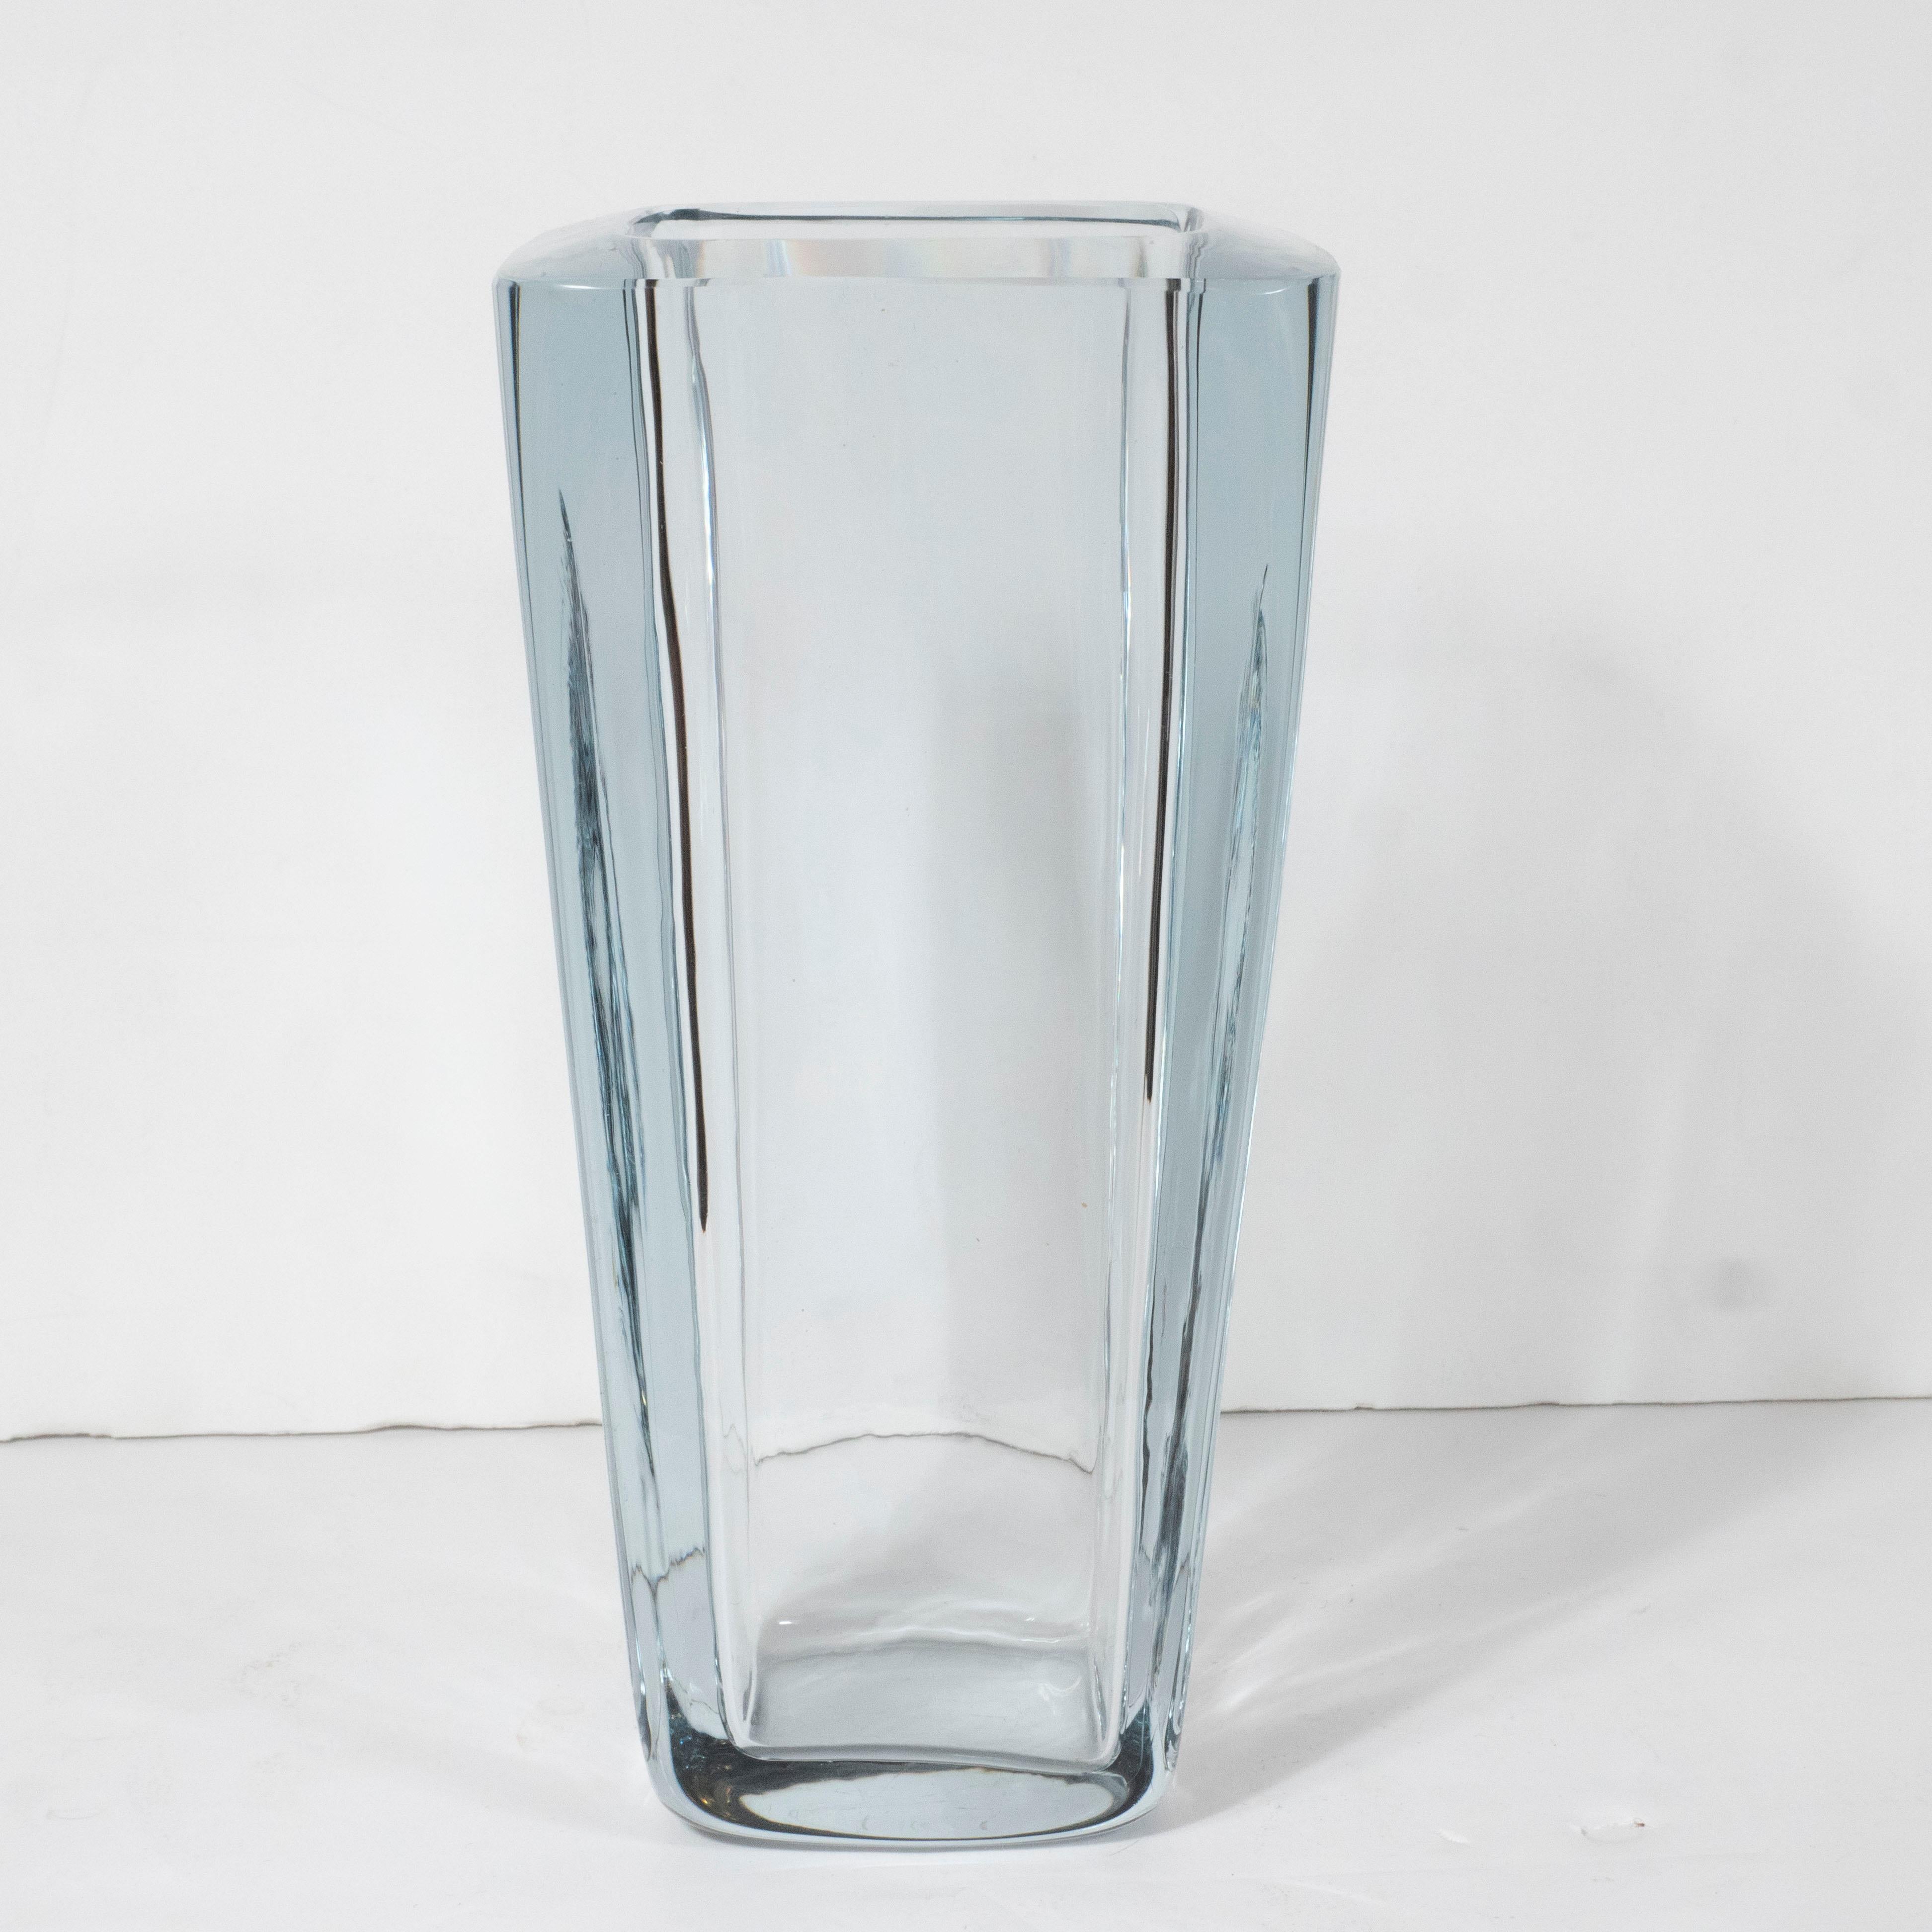 Mid-20th Century Scandinavian Mid-Century Modern Rectangular Pale Blue Translucent Glass Vase